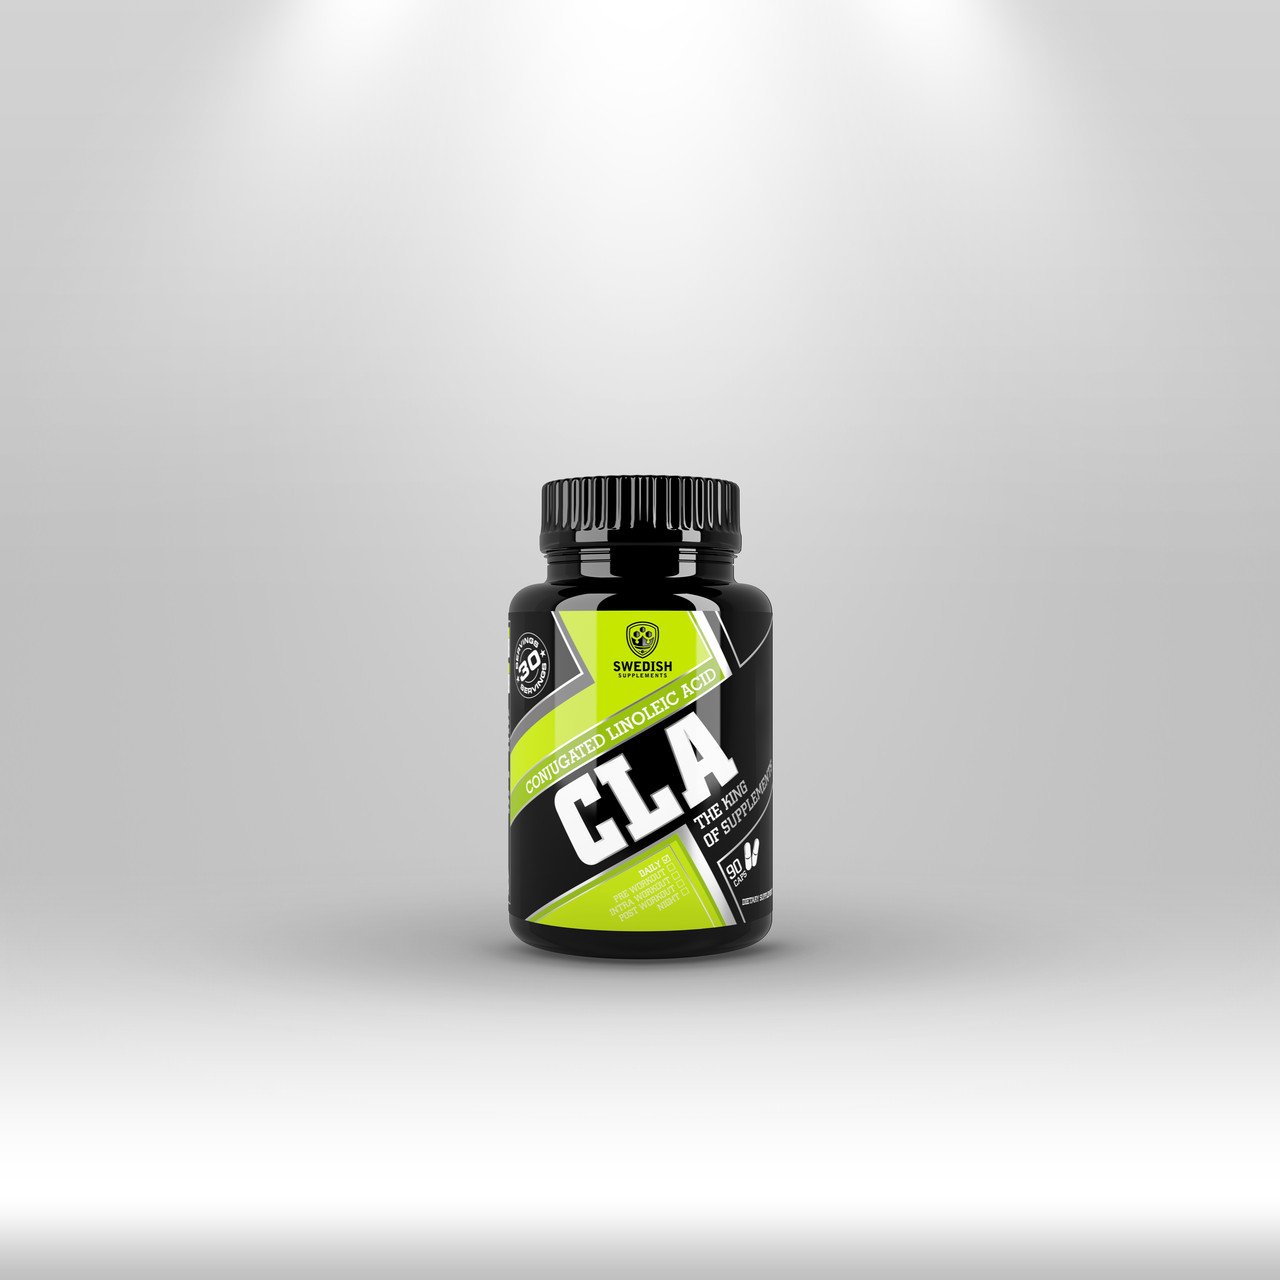 Swedish supplements - CLA 90 caps,  мл, Swedish Supplements. Спец препараты. 